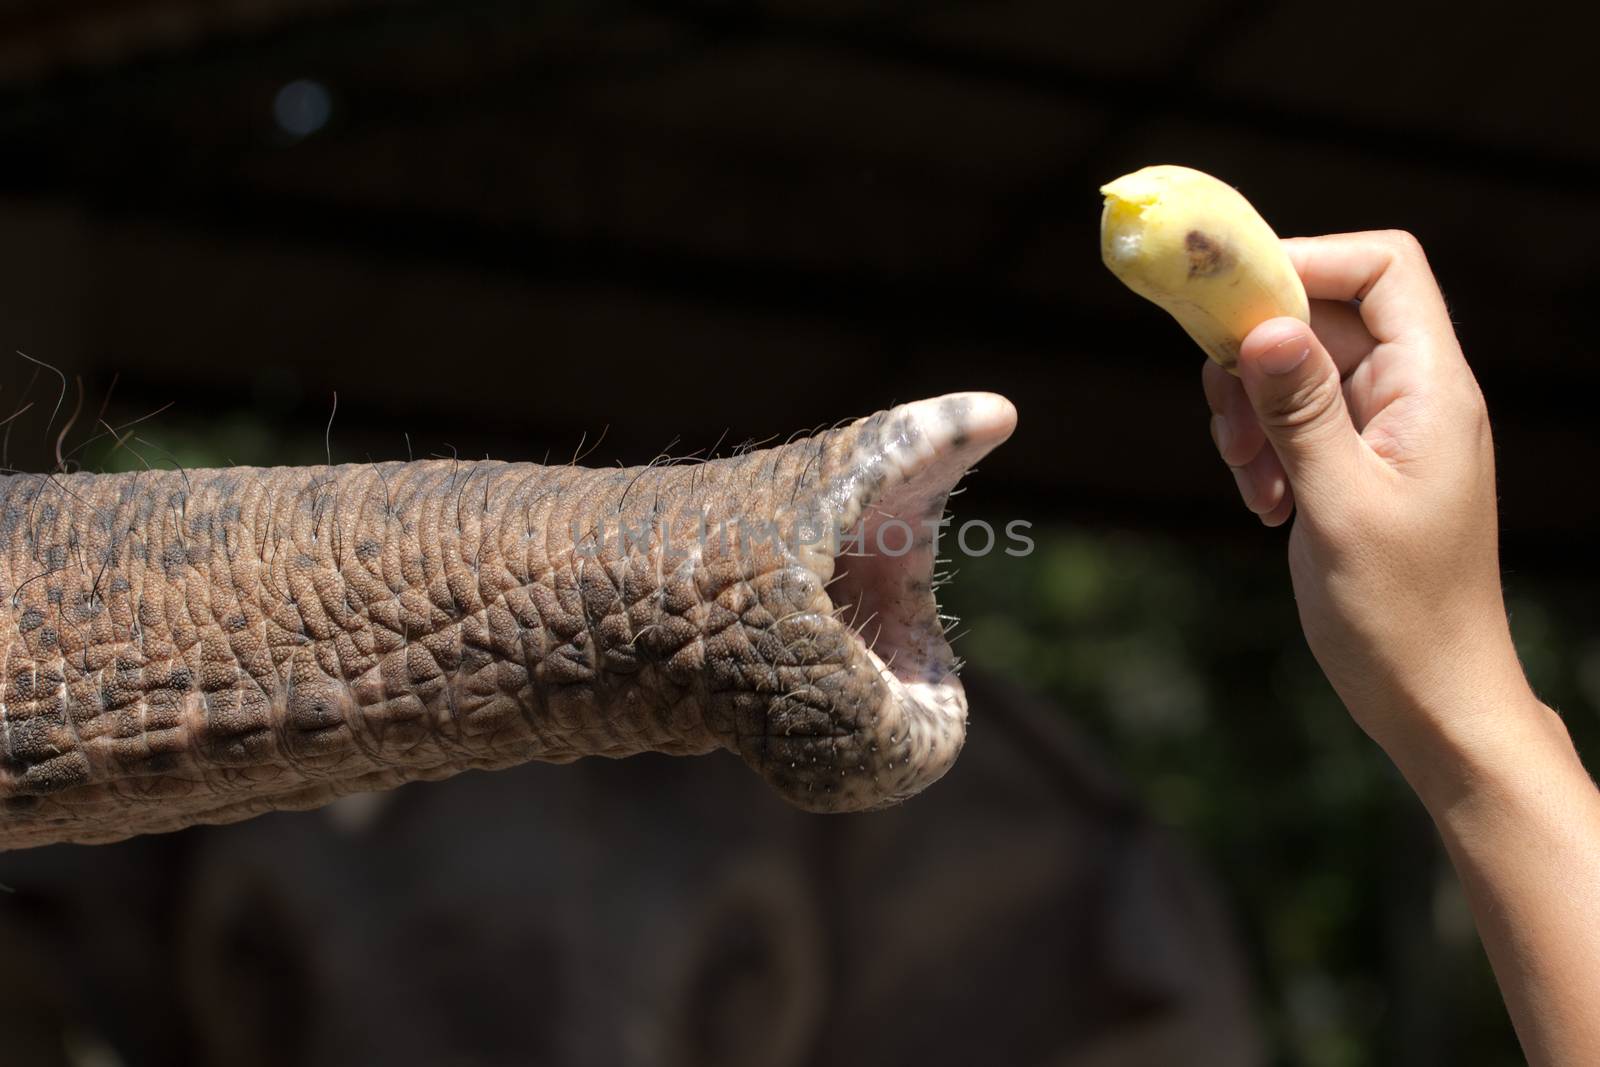 Men hand feeding an elephant with banana